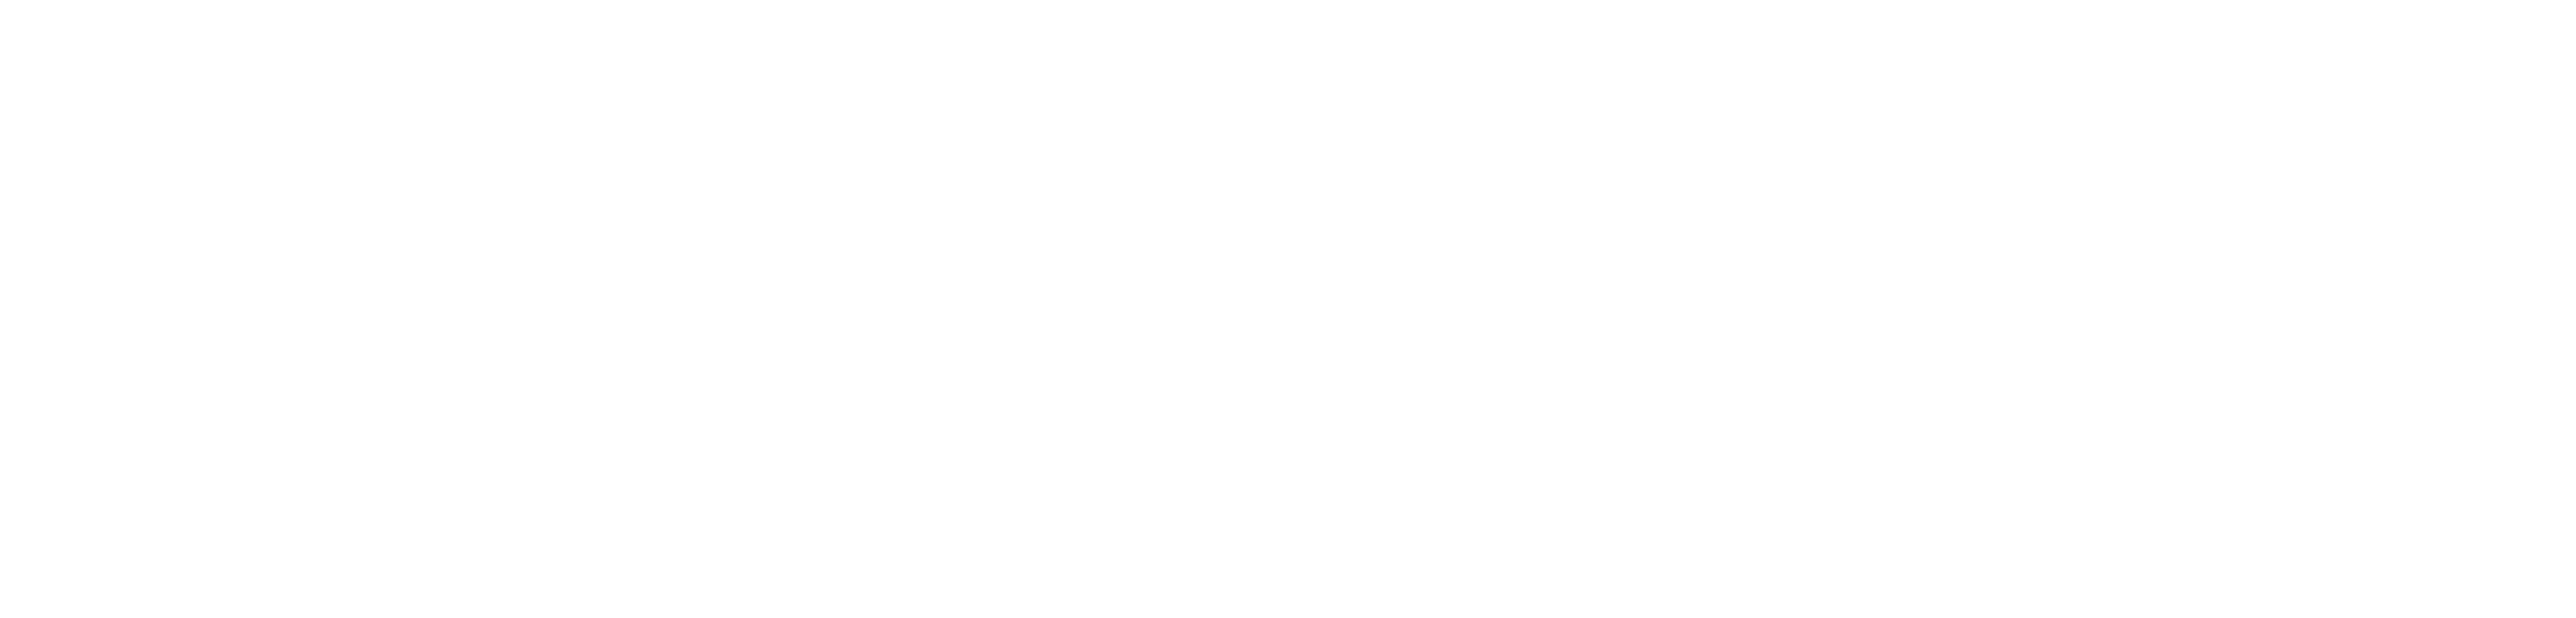 Frylics logo wit